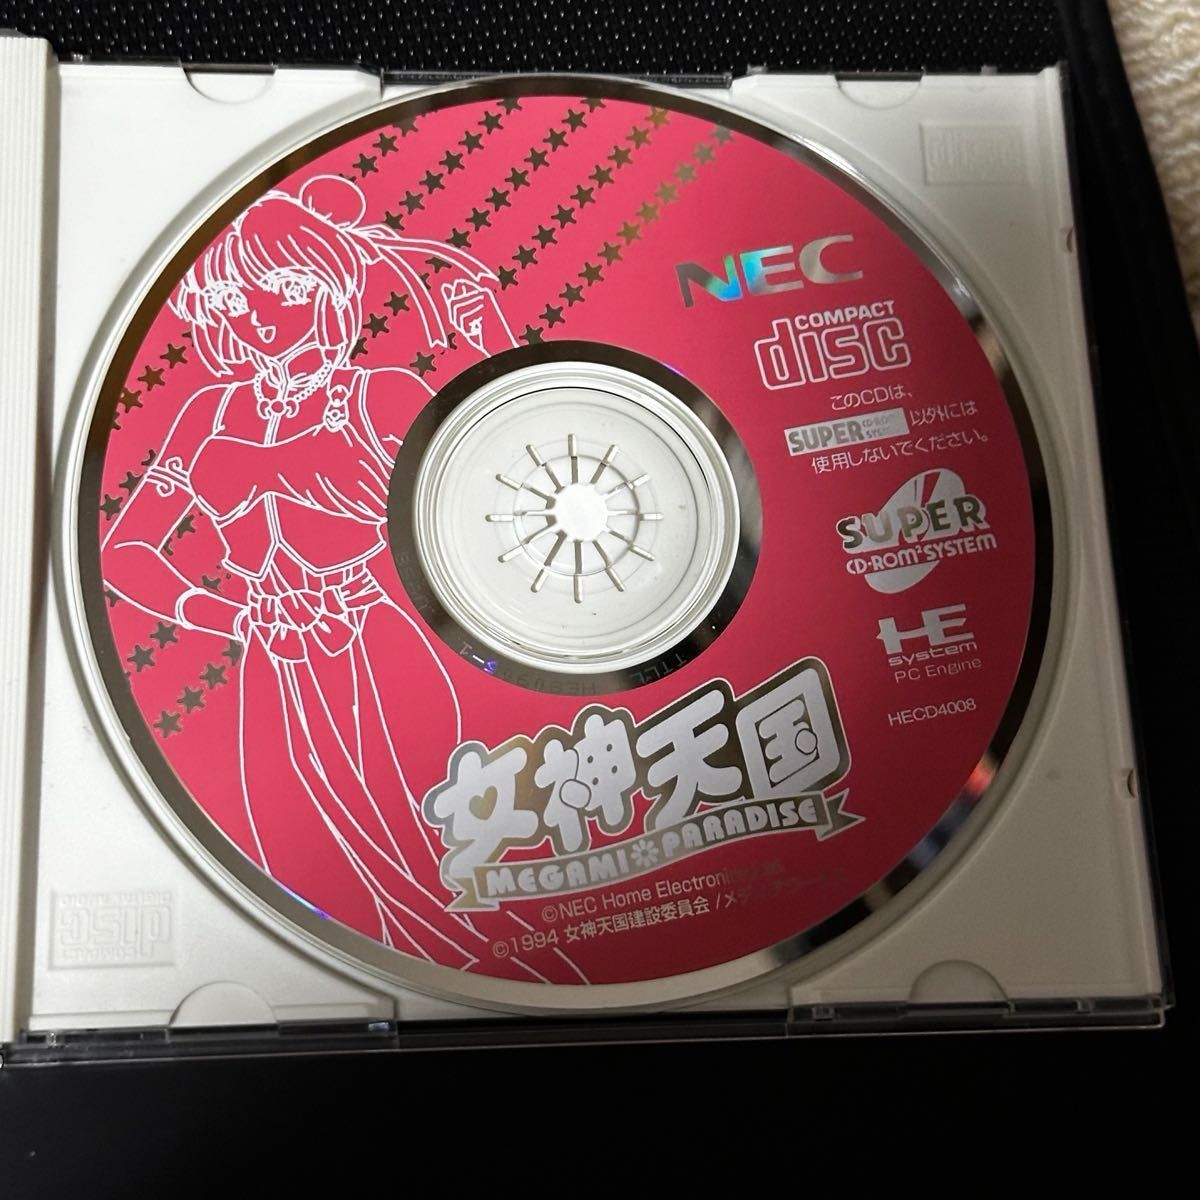 PCエンジン　CD ROM 女神天国